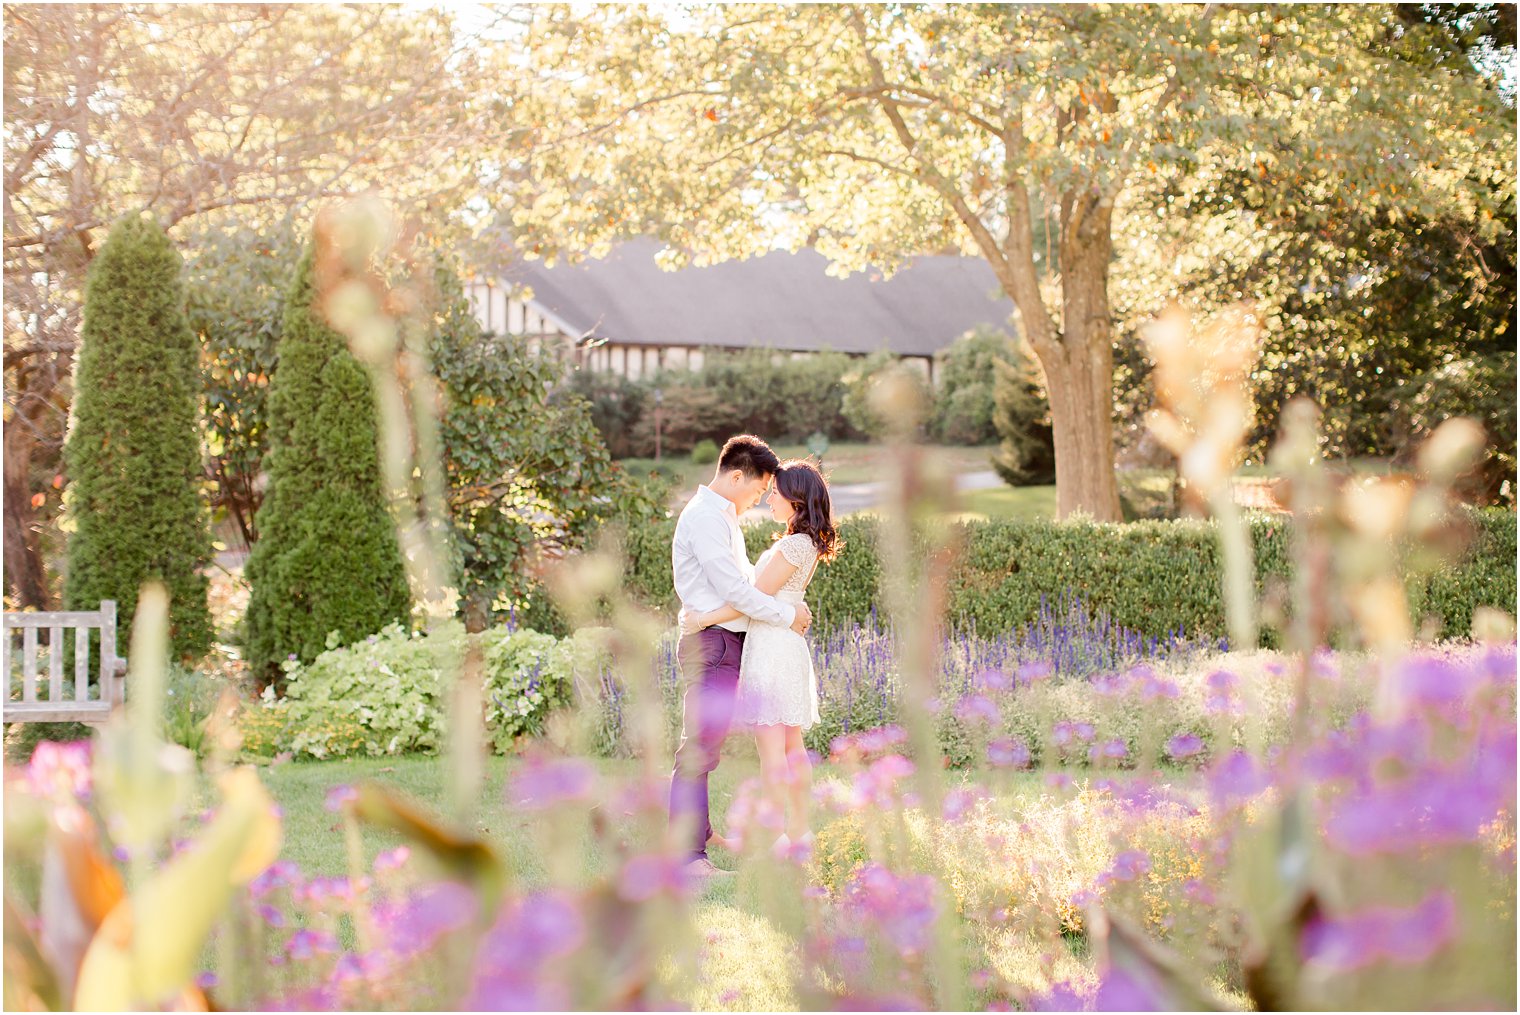 Romantic photo at Skylands Manor in Ringwood NJ